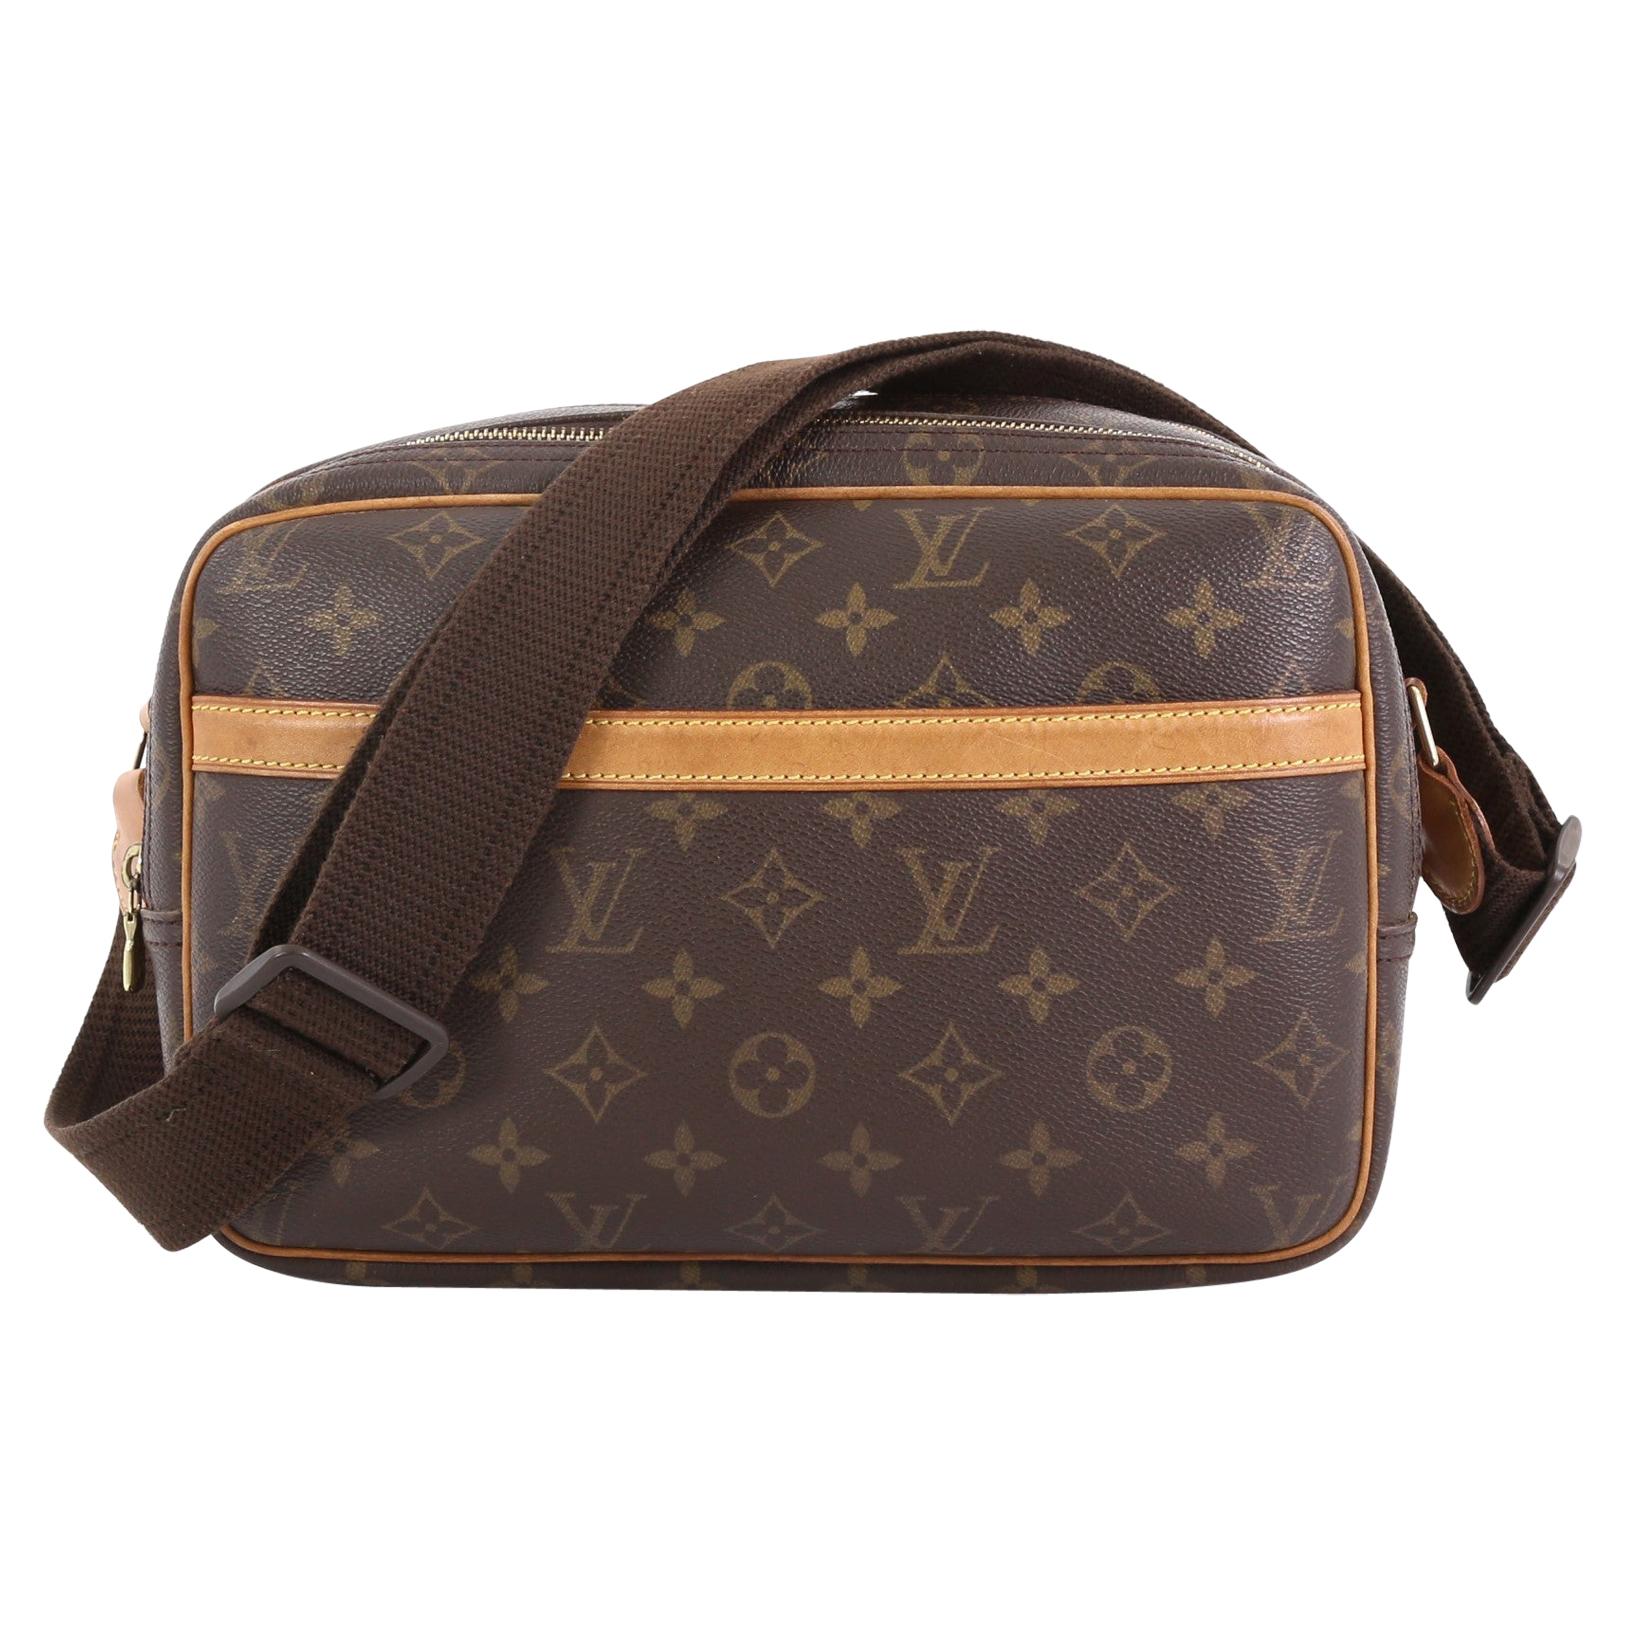 Sold at Auction: Louis Vuitton LV Monogram Logo Reporter PM Bag